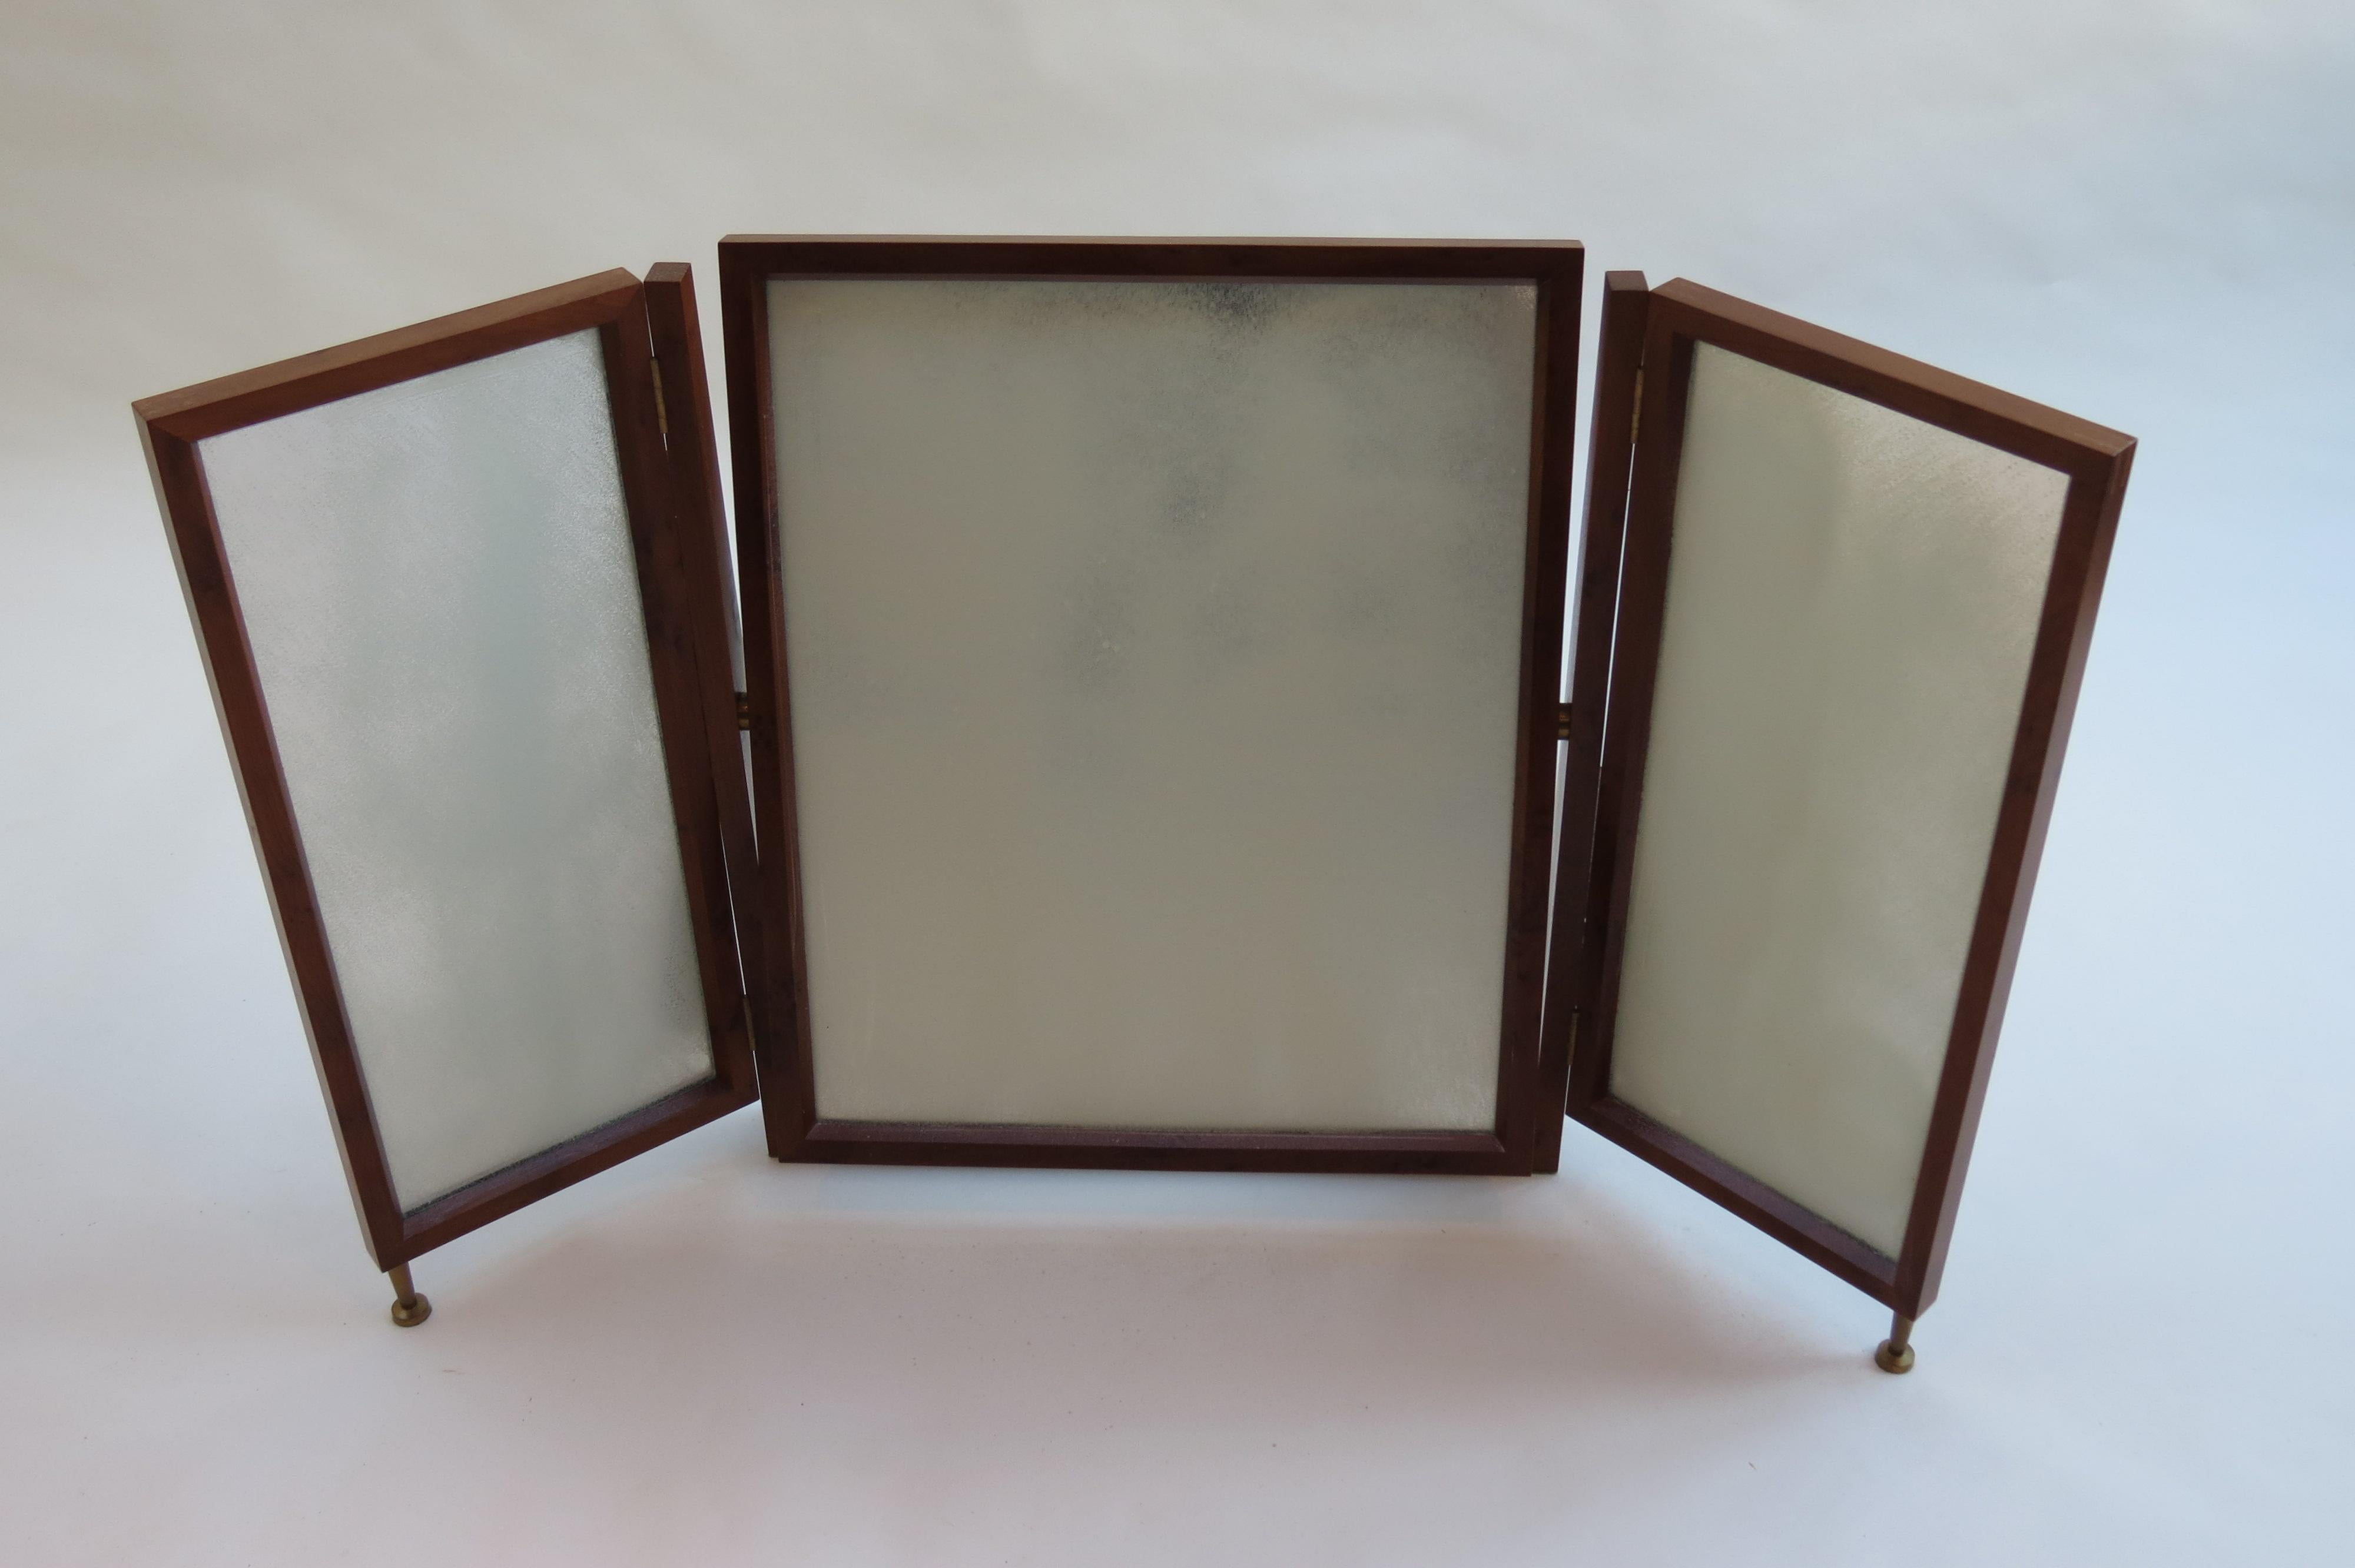 1970s Arts & Crafts Style Bespoke Handmade Freestanding Triptych Mirror Yew Wood 2